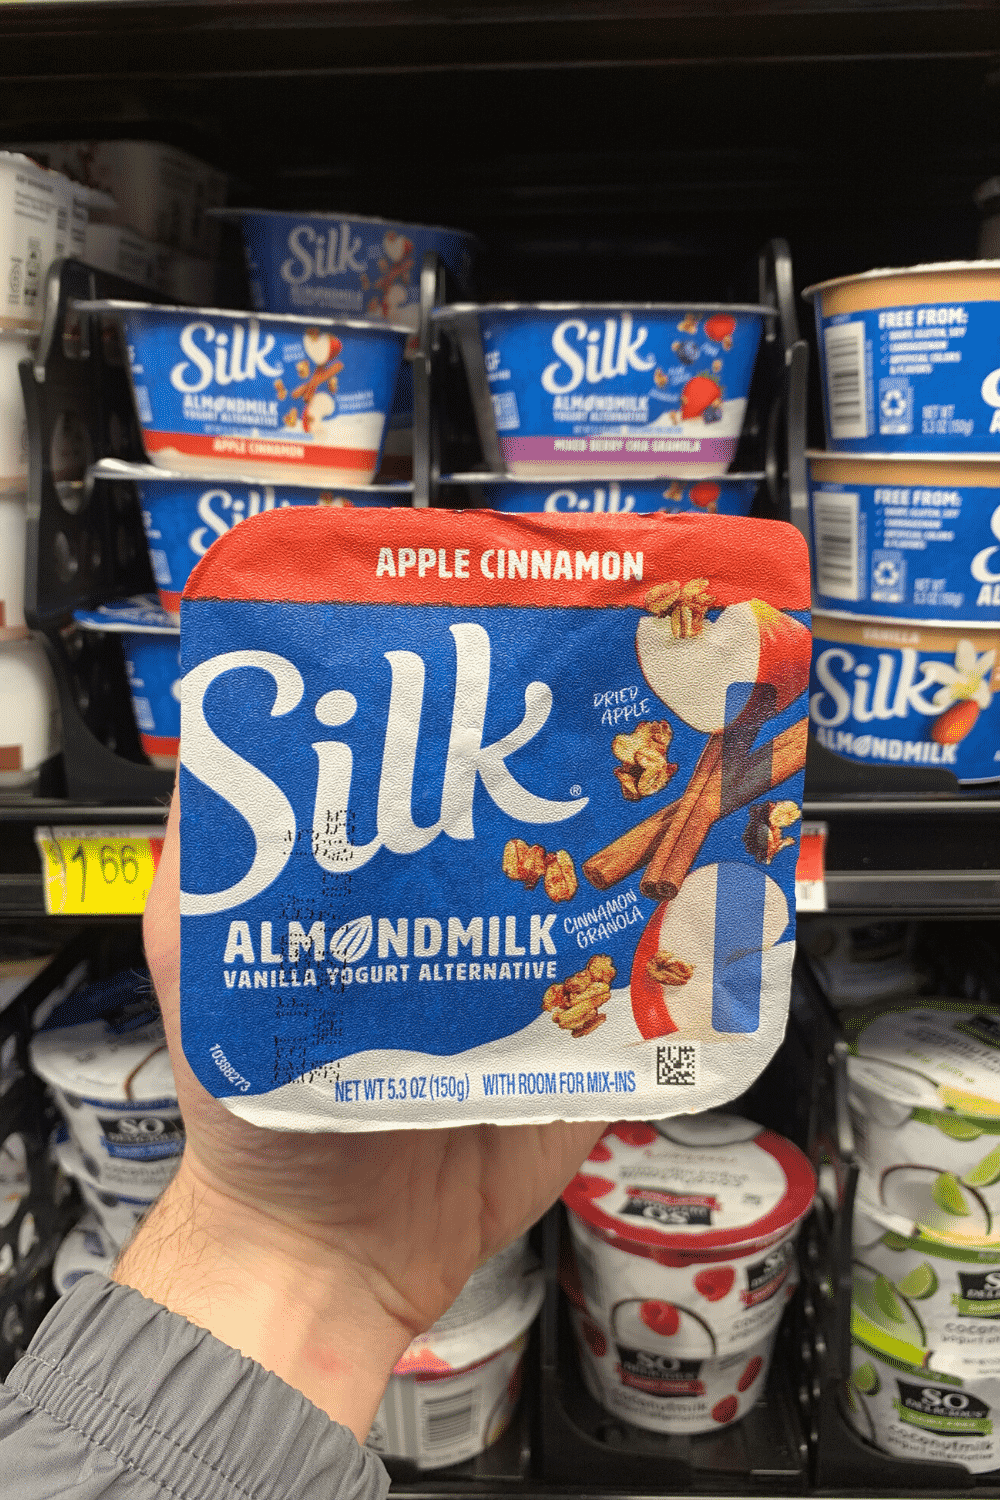 A hand holding silk apple cinnamon almond milk yogurt with granola.